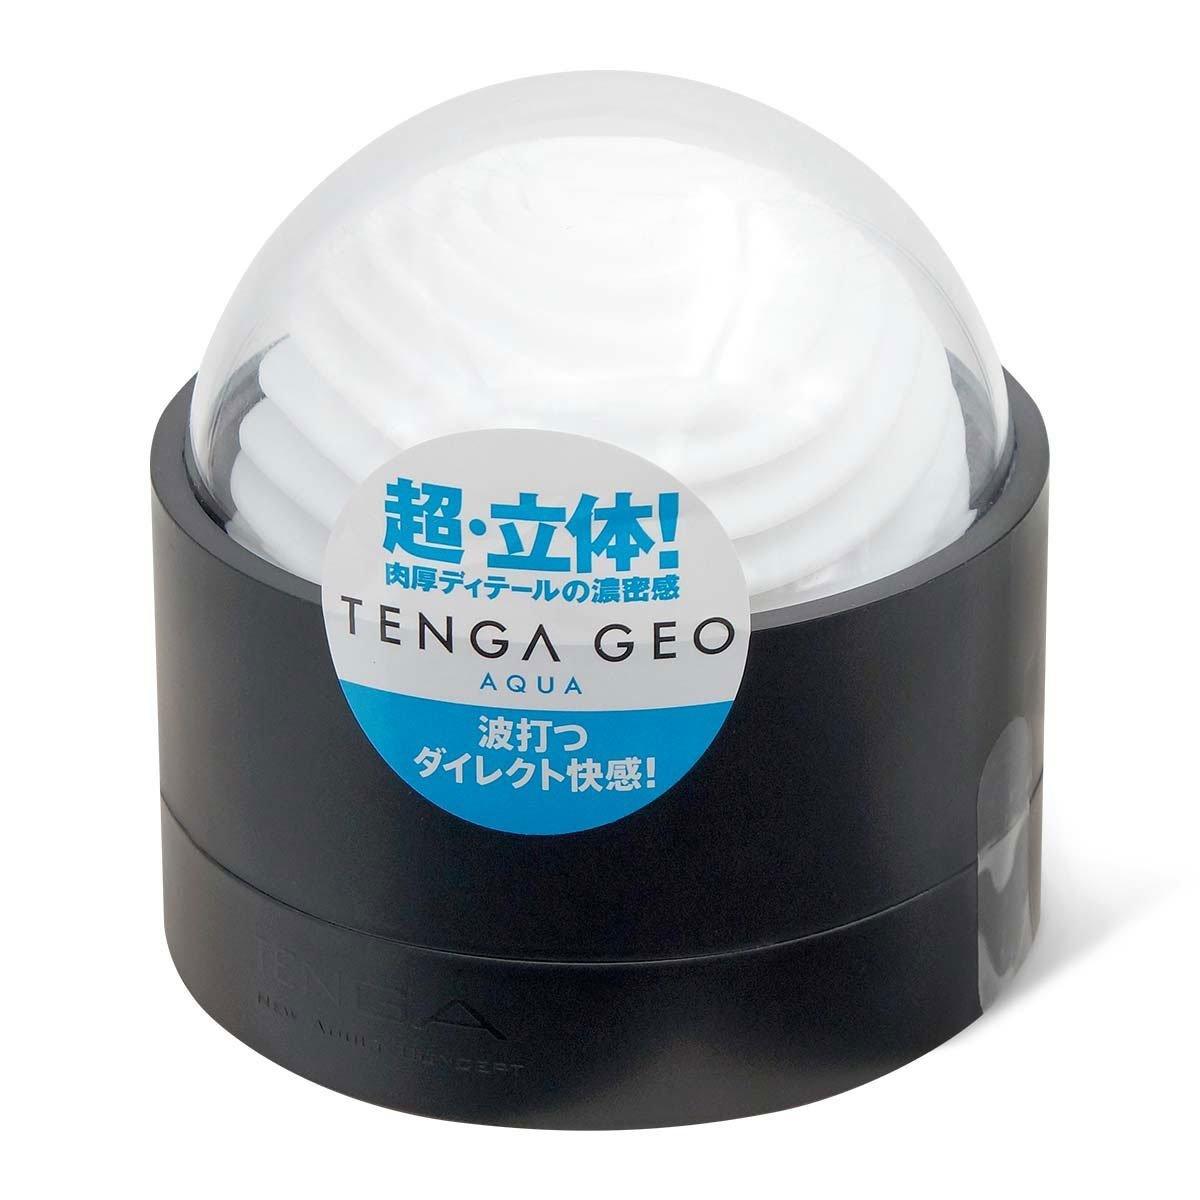 Black Tenga GEO - Aqua